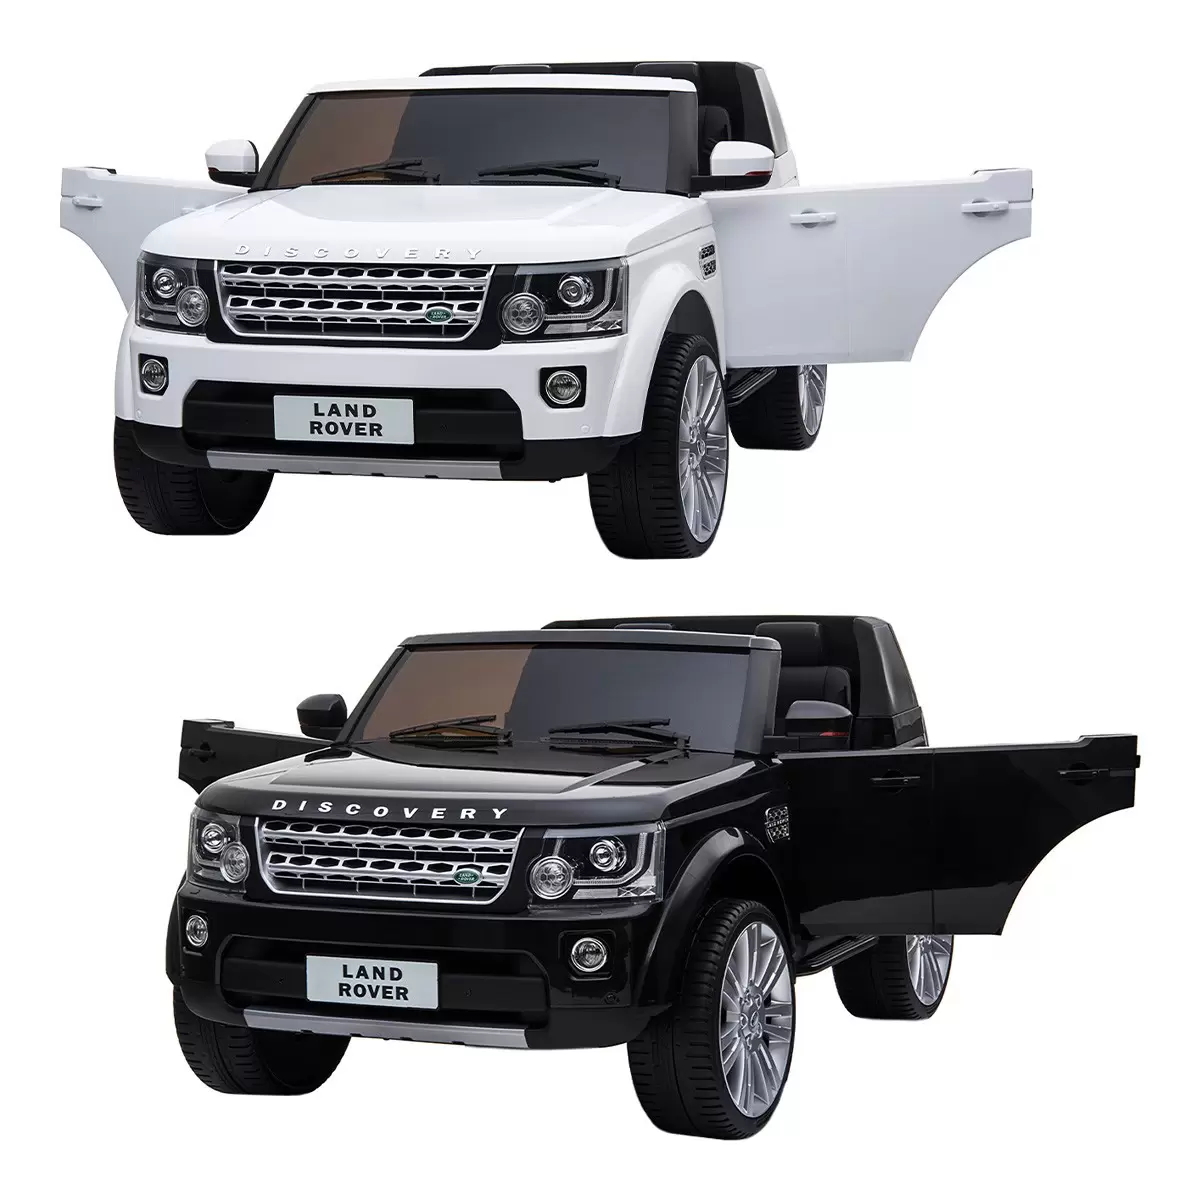 Land Rover 兒童雙人電動玩具車 多種顏色選擇